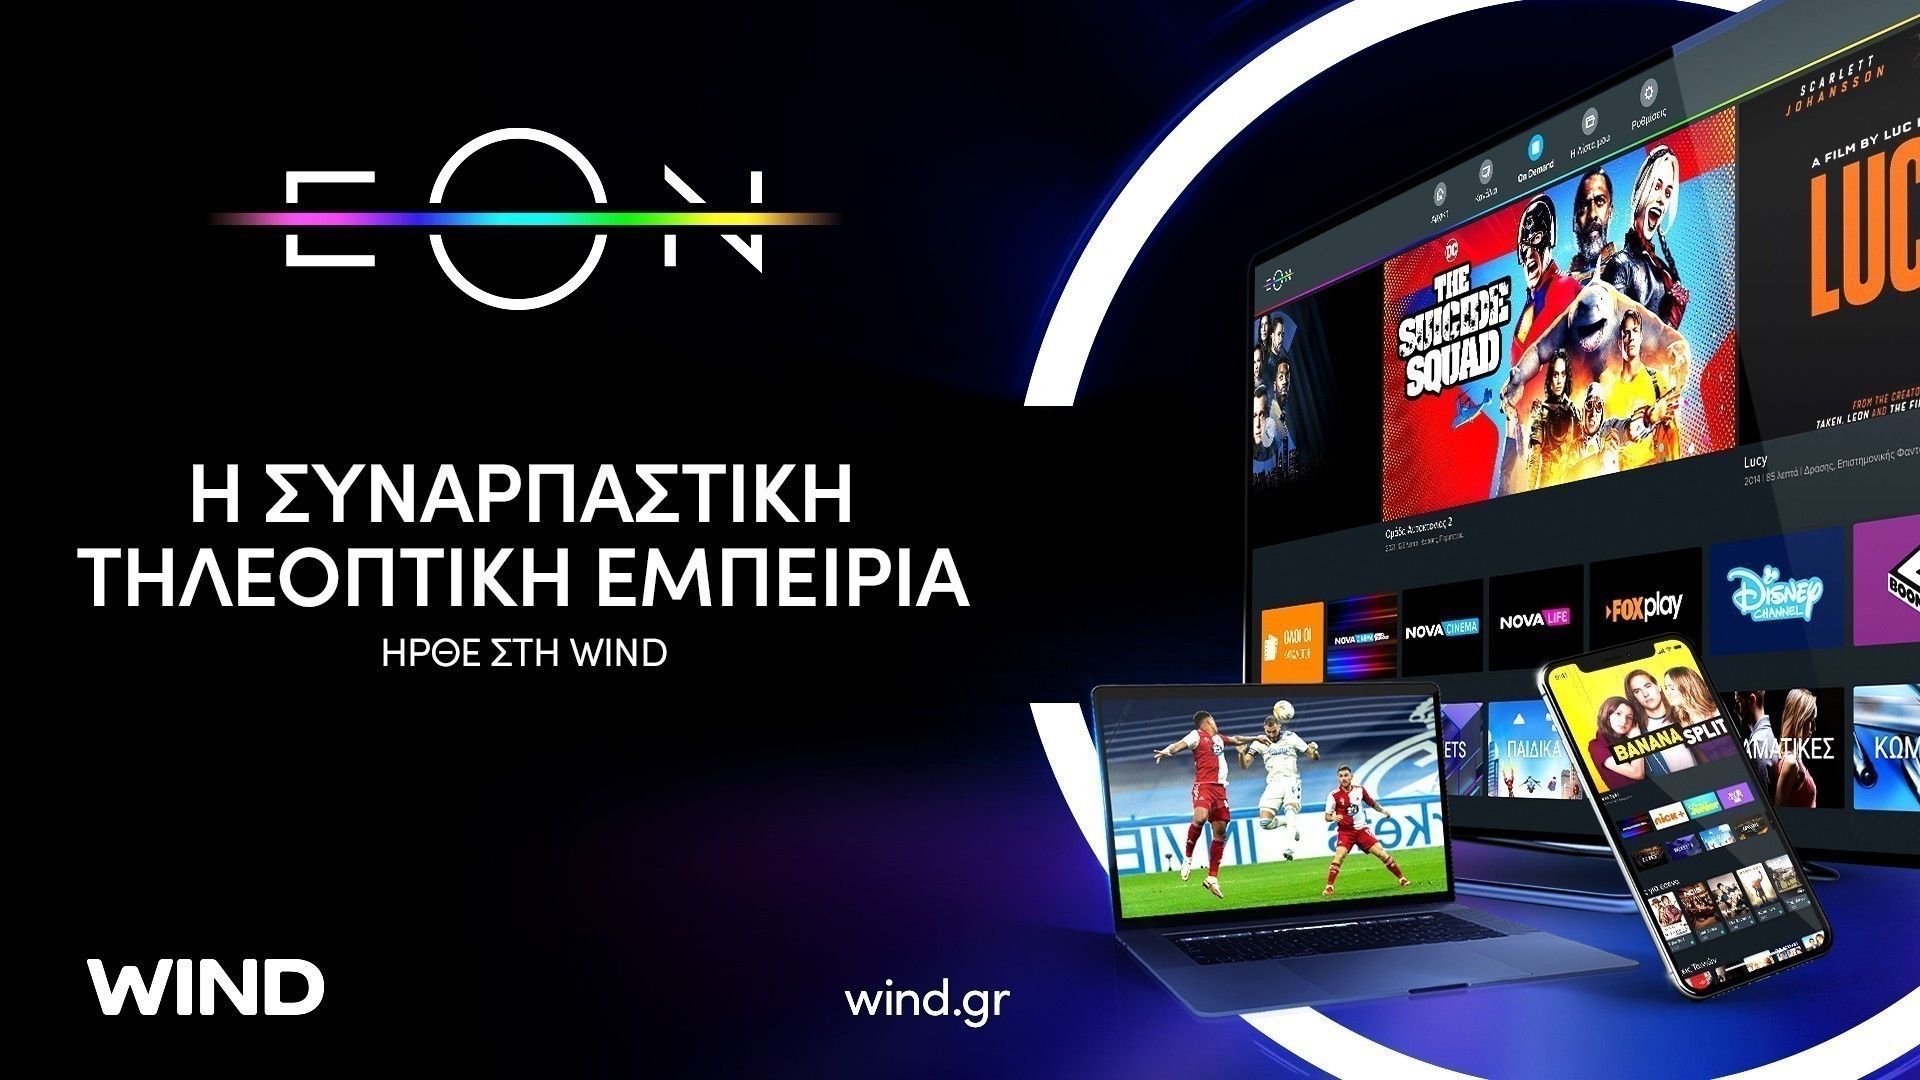 EON TV: Η πιο επιτυχημένη πλατφόρμα συνδρομητικής τηλεόρασης στην ΝΑ Ευρώπη έρχεται και στη Wind